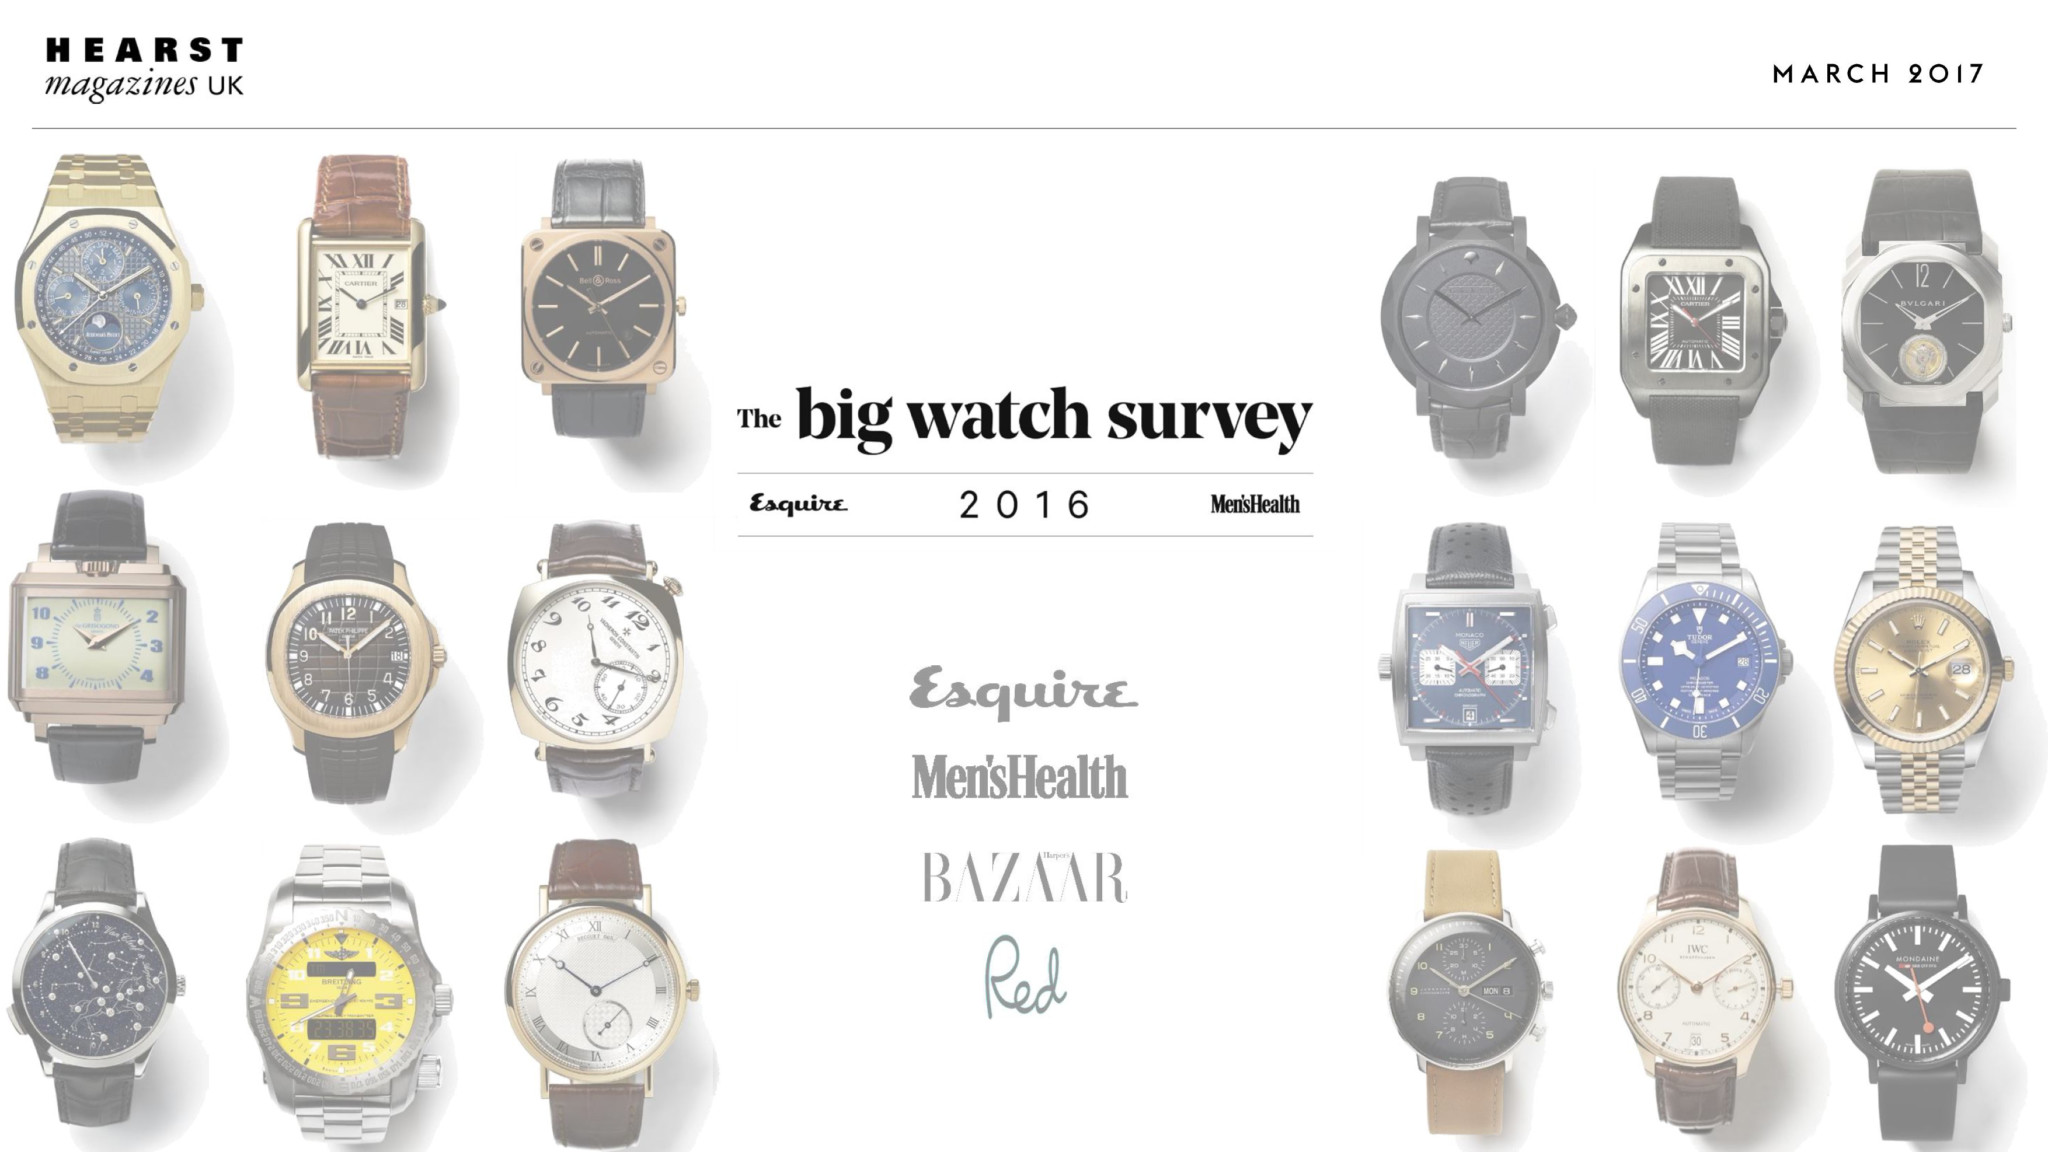 Biggest Watch Survey 2015 Reveals Findings - First Class Watches Blog